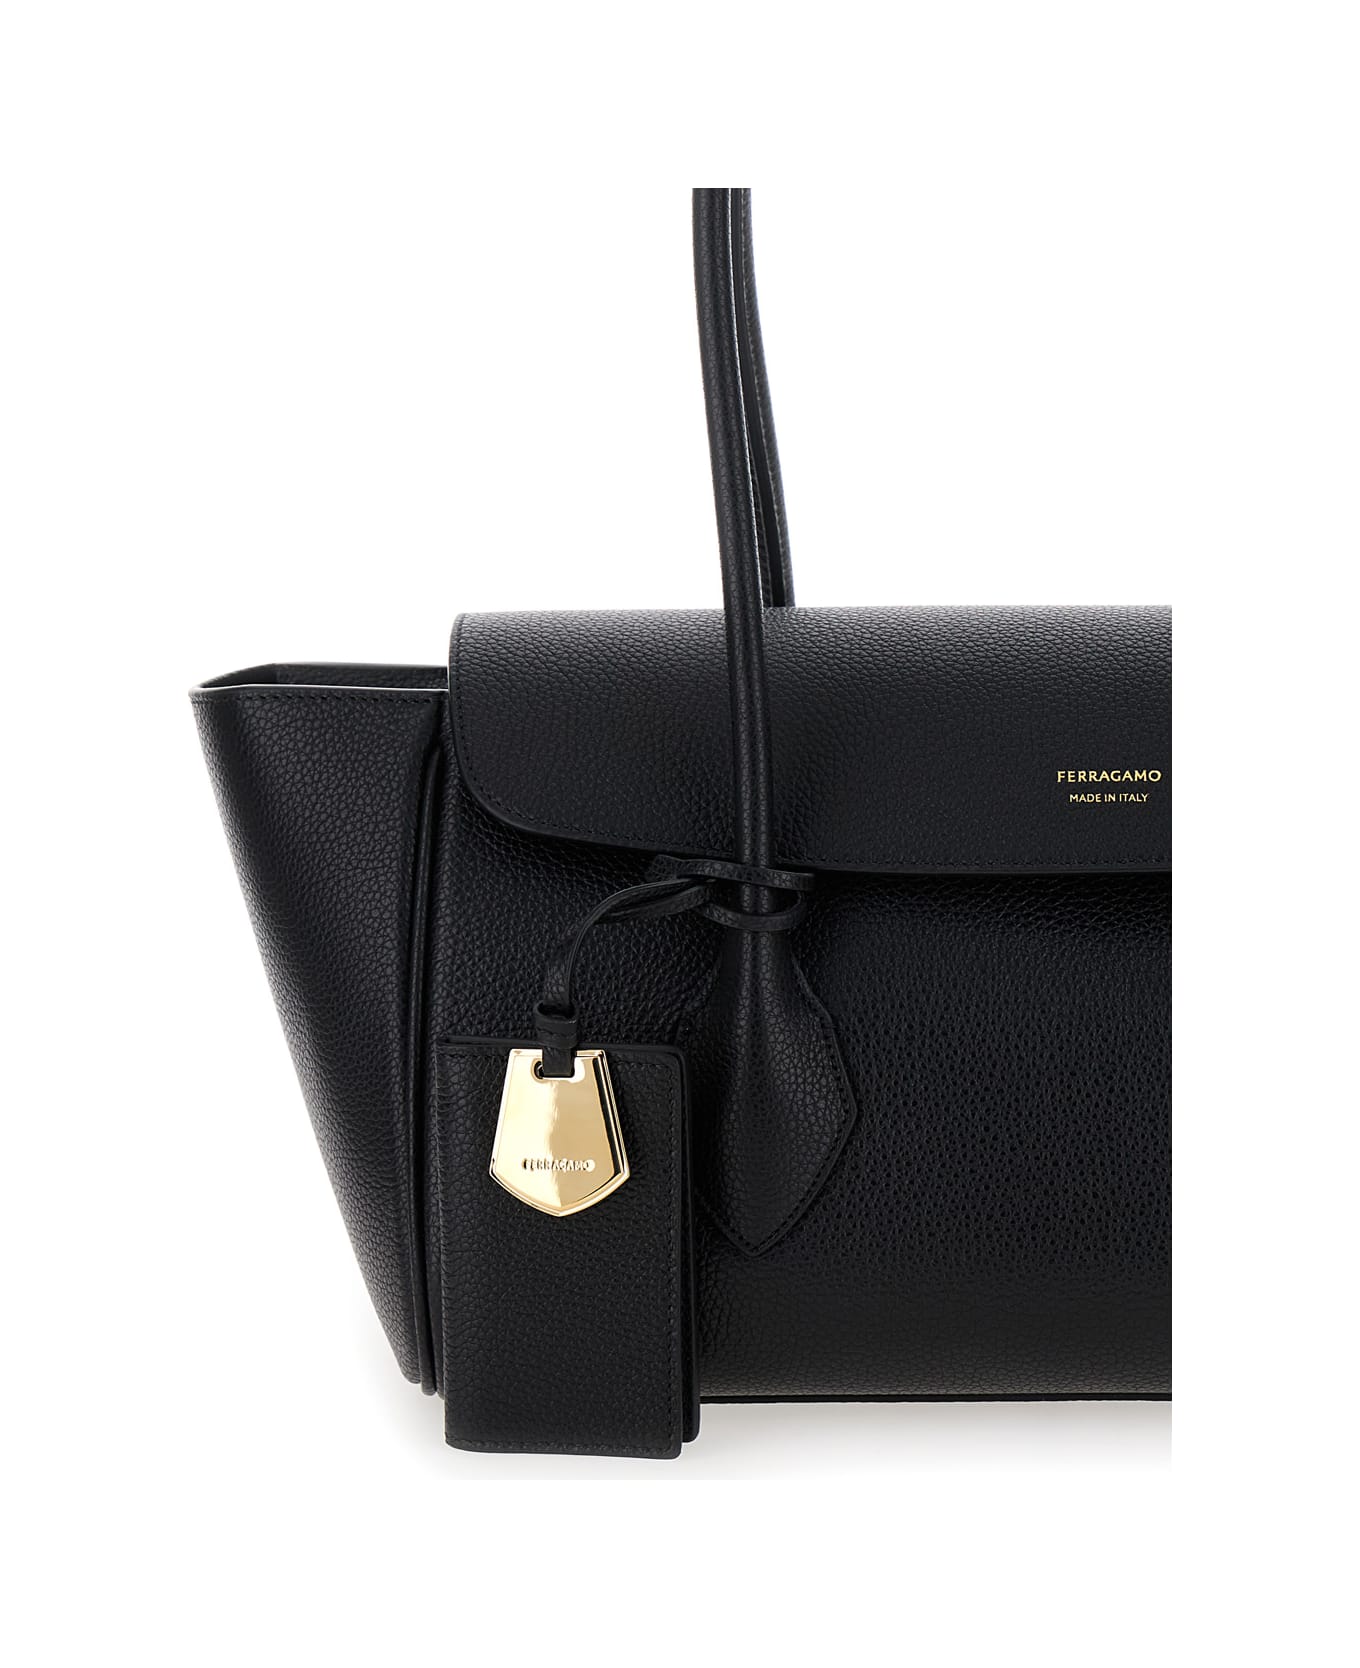 Ferragamo 'east-west M' Black Handbag With Logo Detail In Hammered Leather Woman - Black トートバッグ